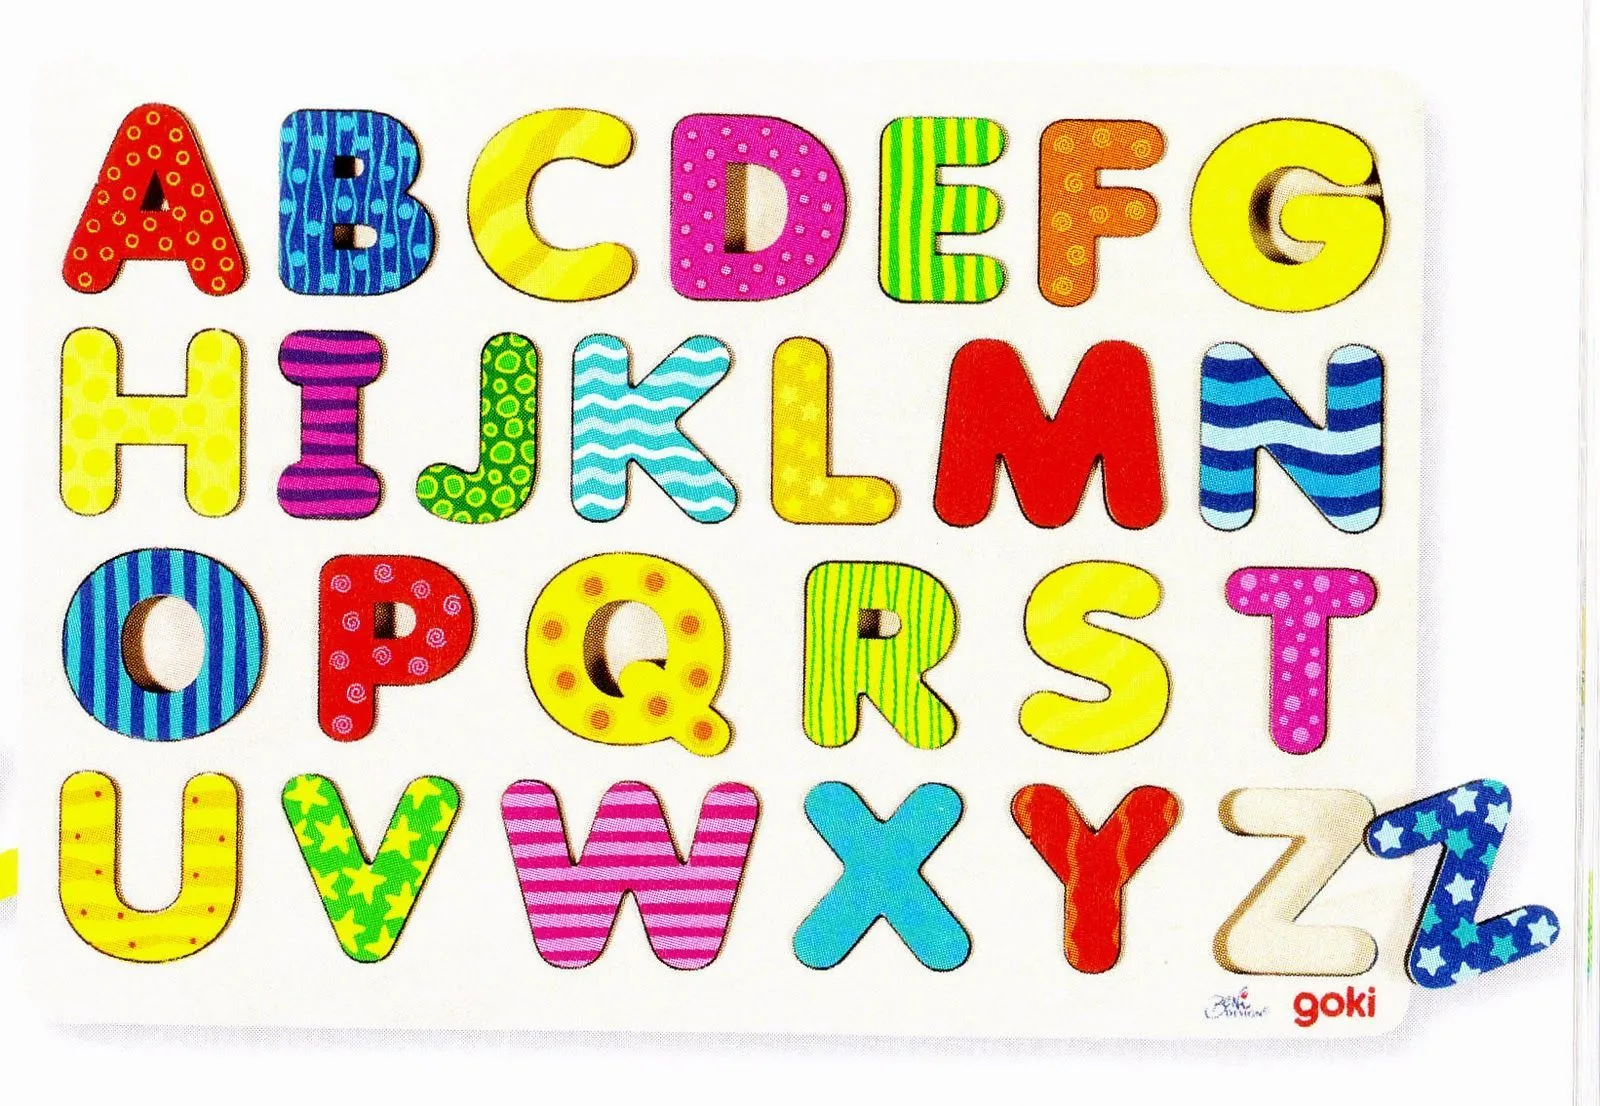 letras decoradas para imprimir - Buscar con Google | LLETRES ...